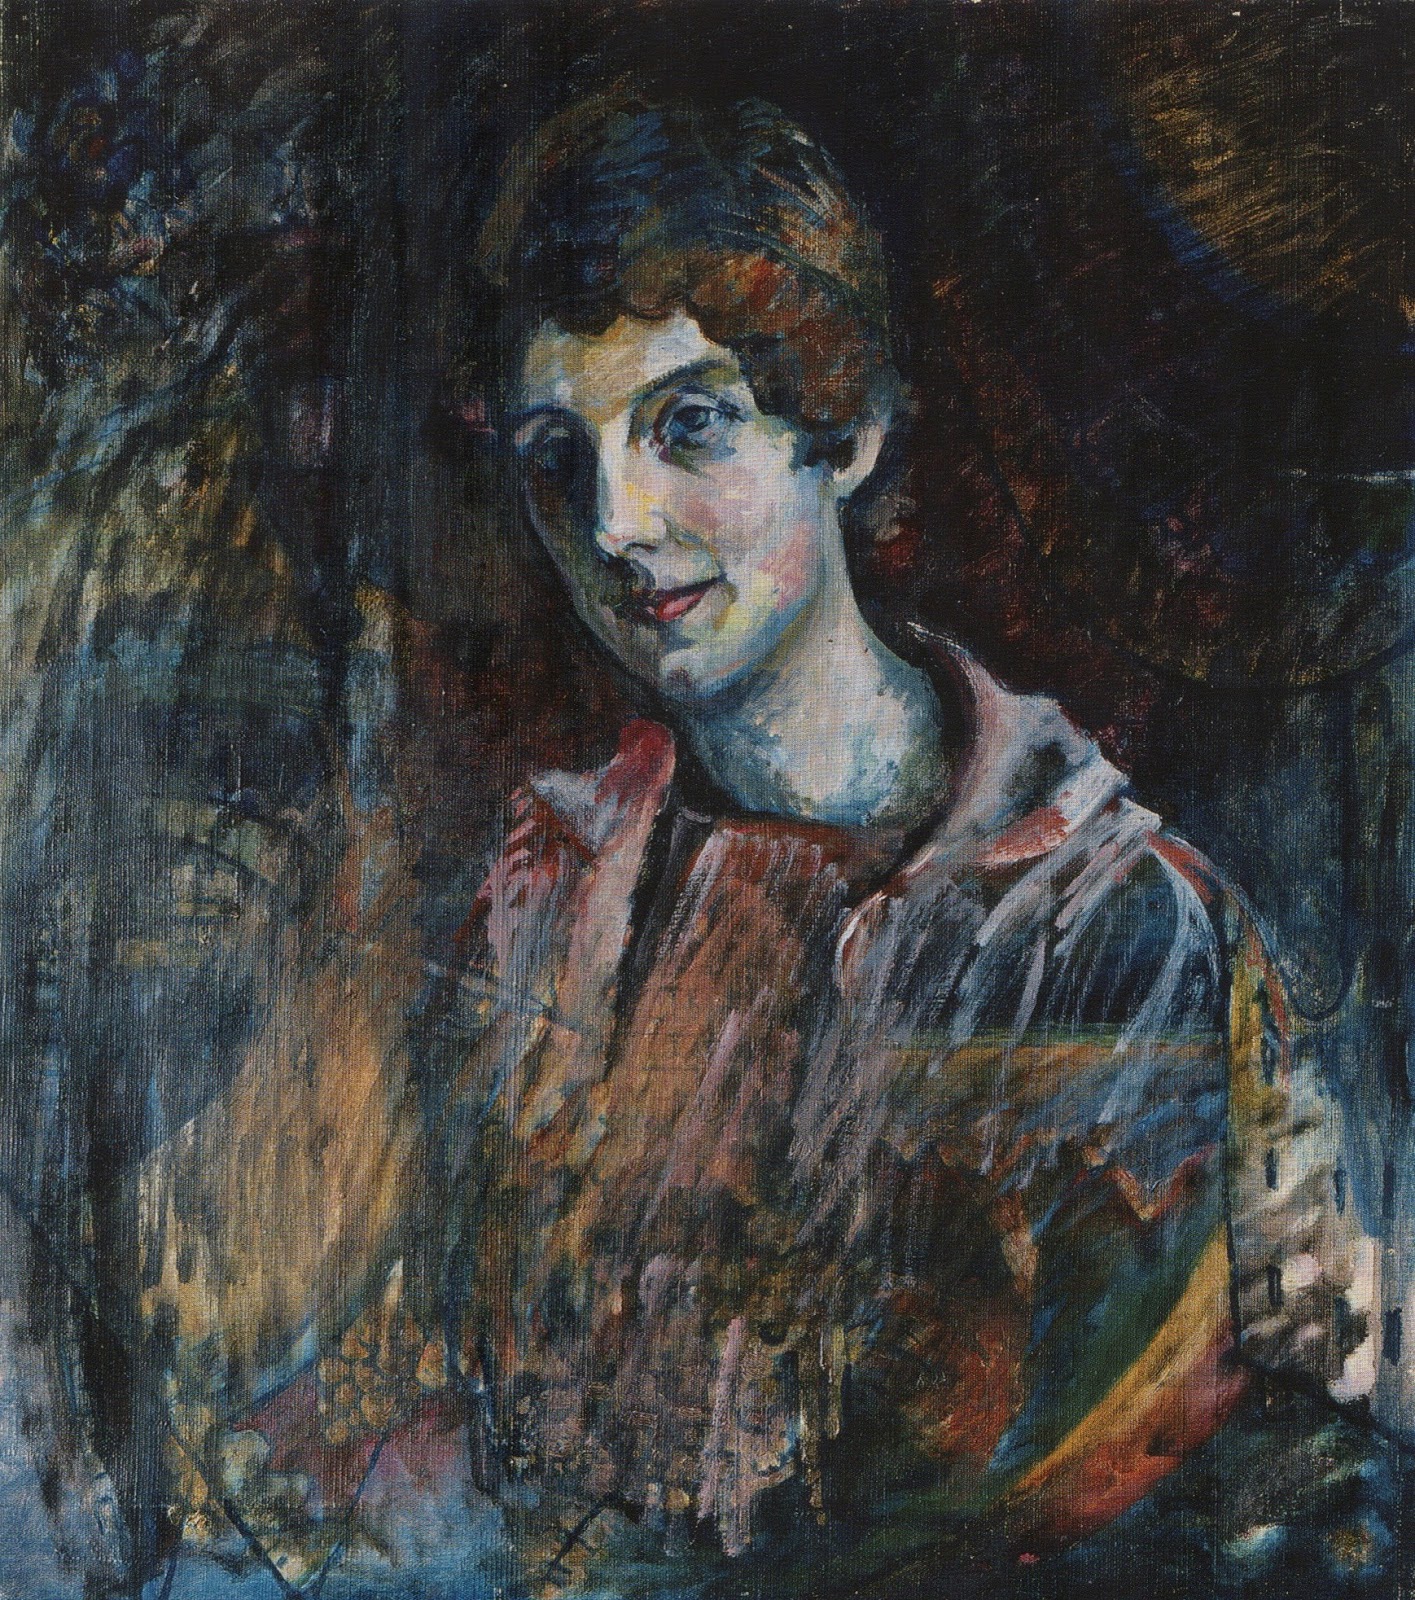 Wassily+Kandinsky-1866-1944 (404).jpg